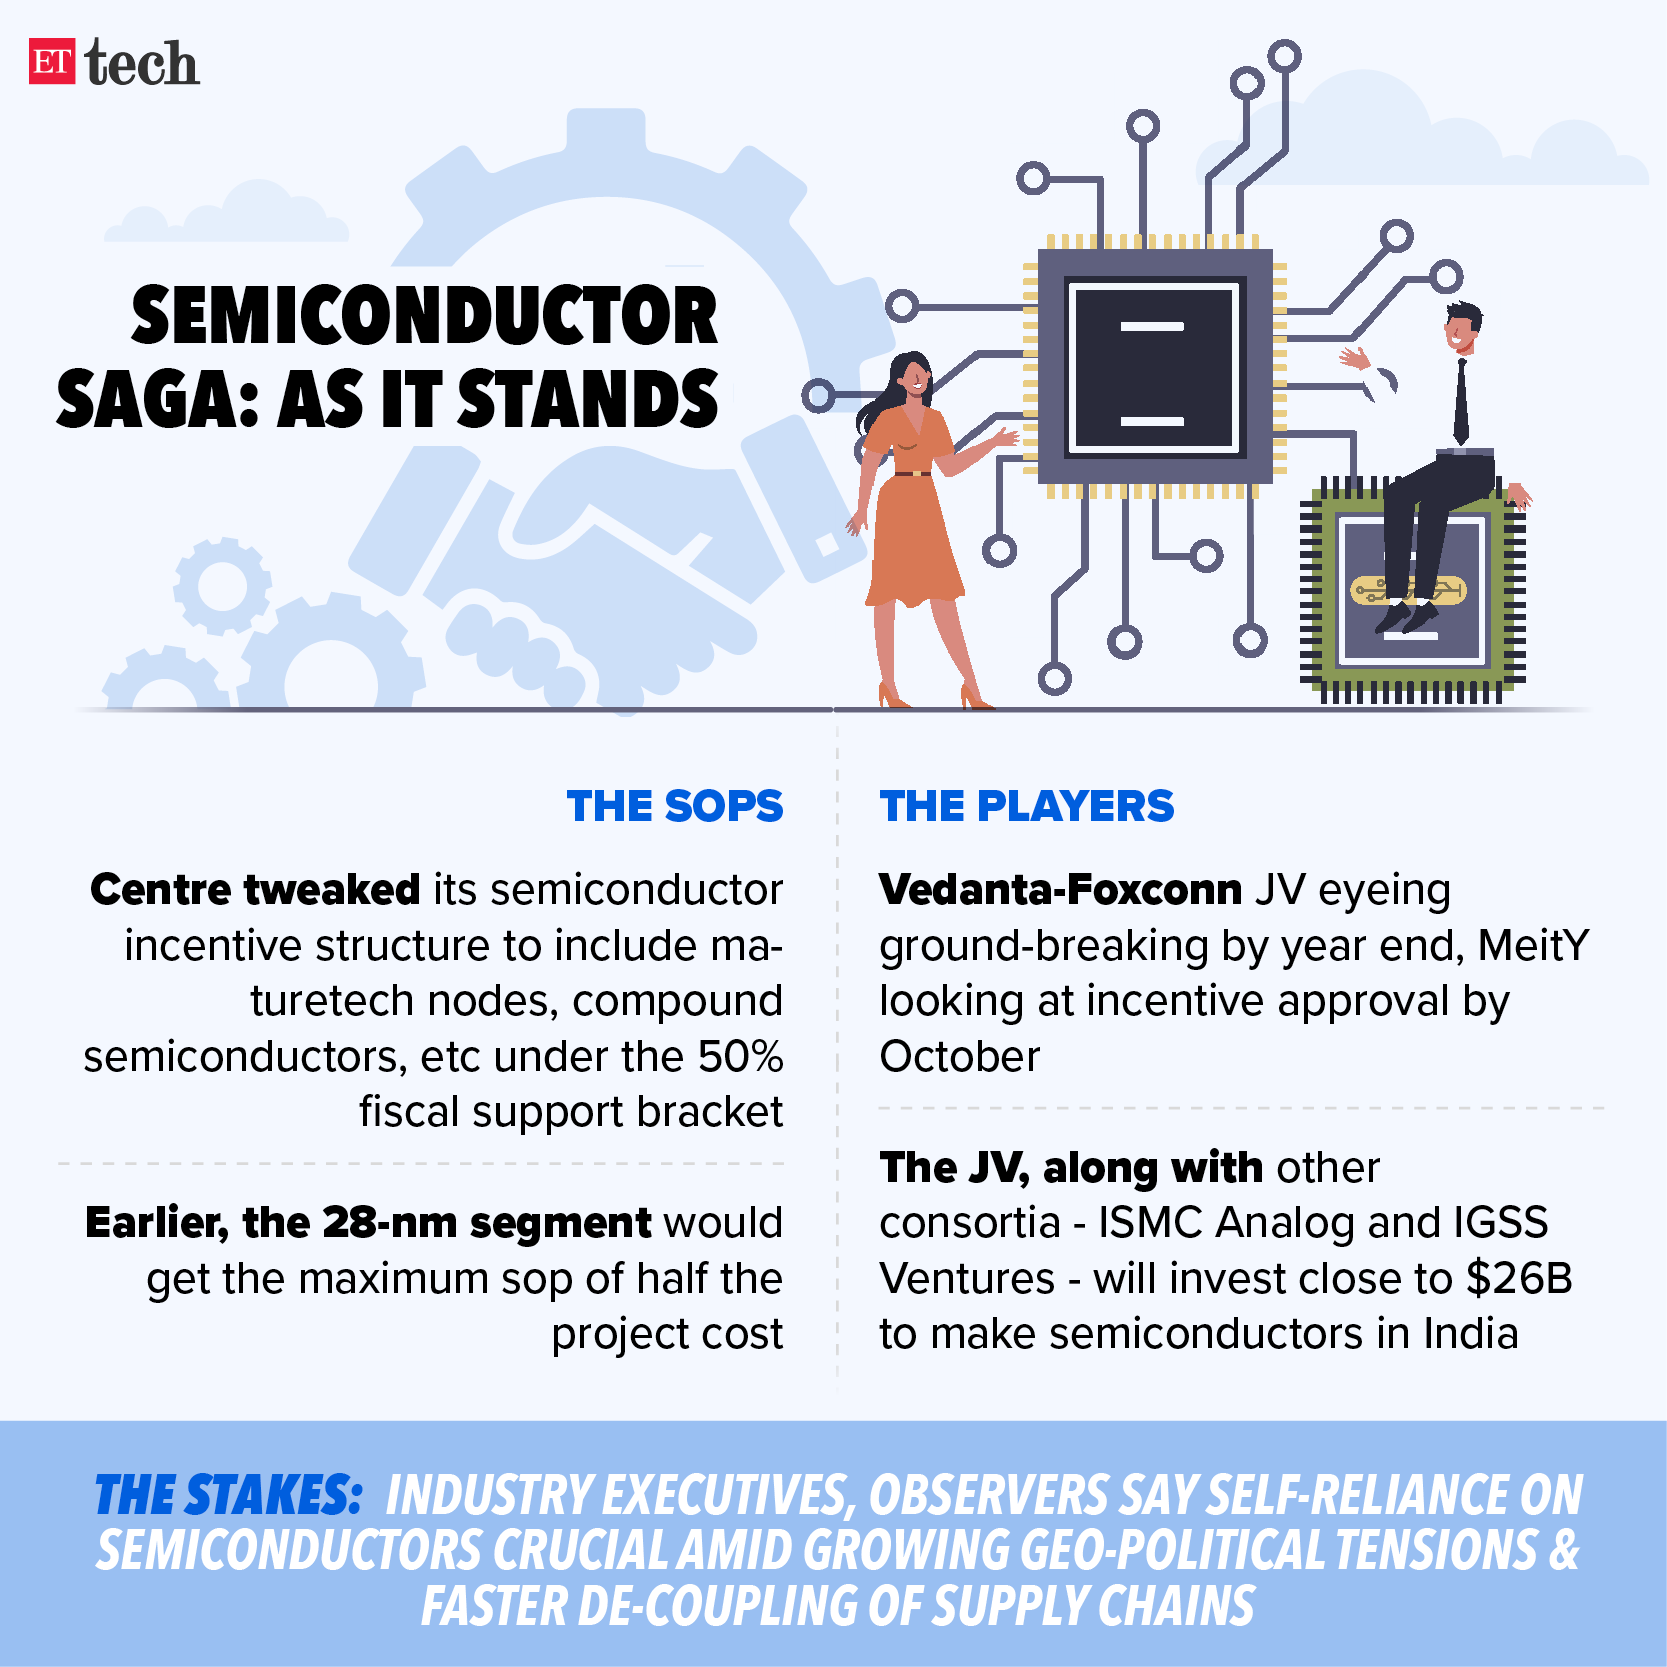 Semiconductor saga-